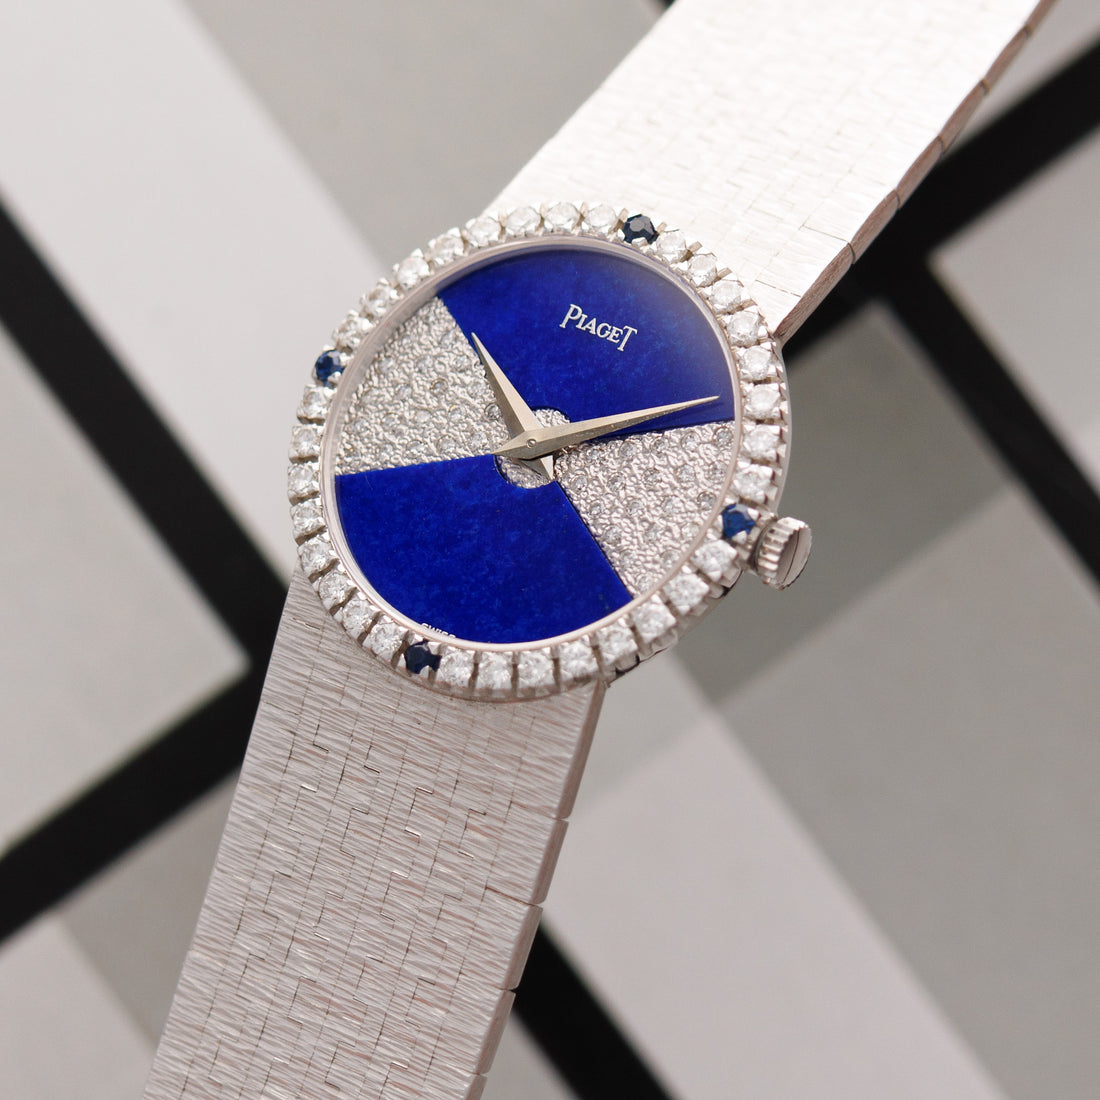 Piaget White Gold, Lapis and Diamond Watch Ref. 9706